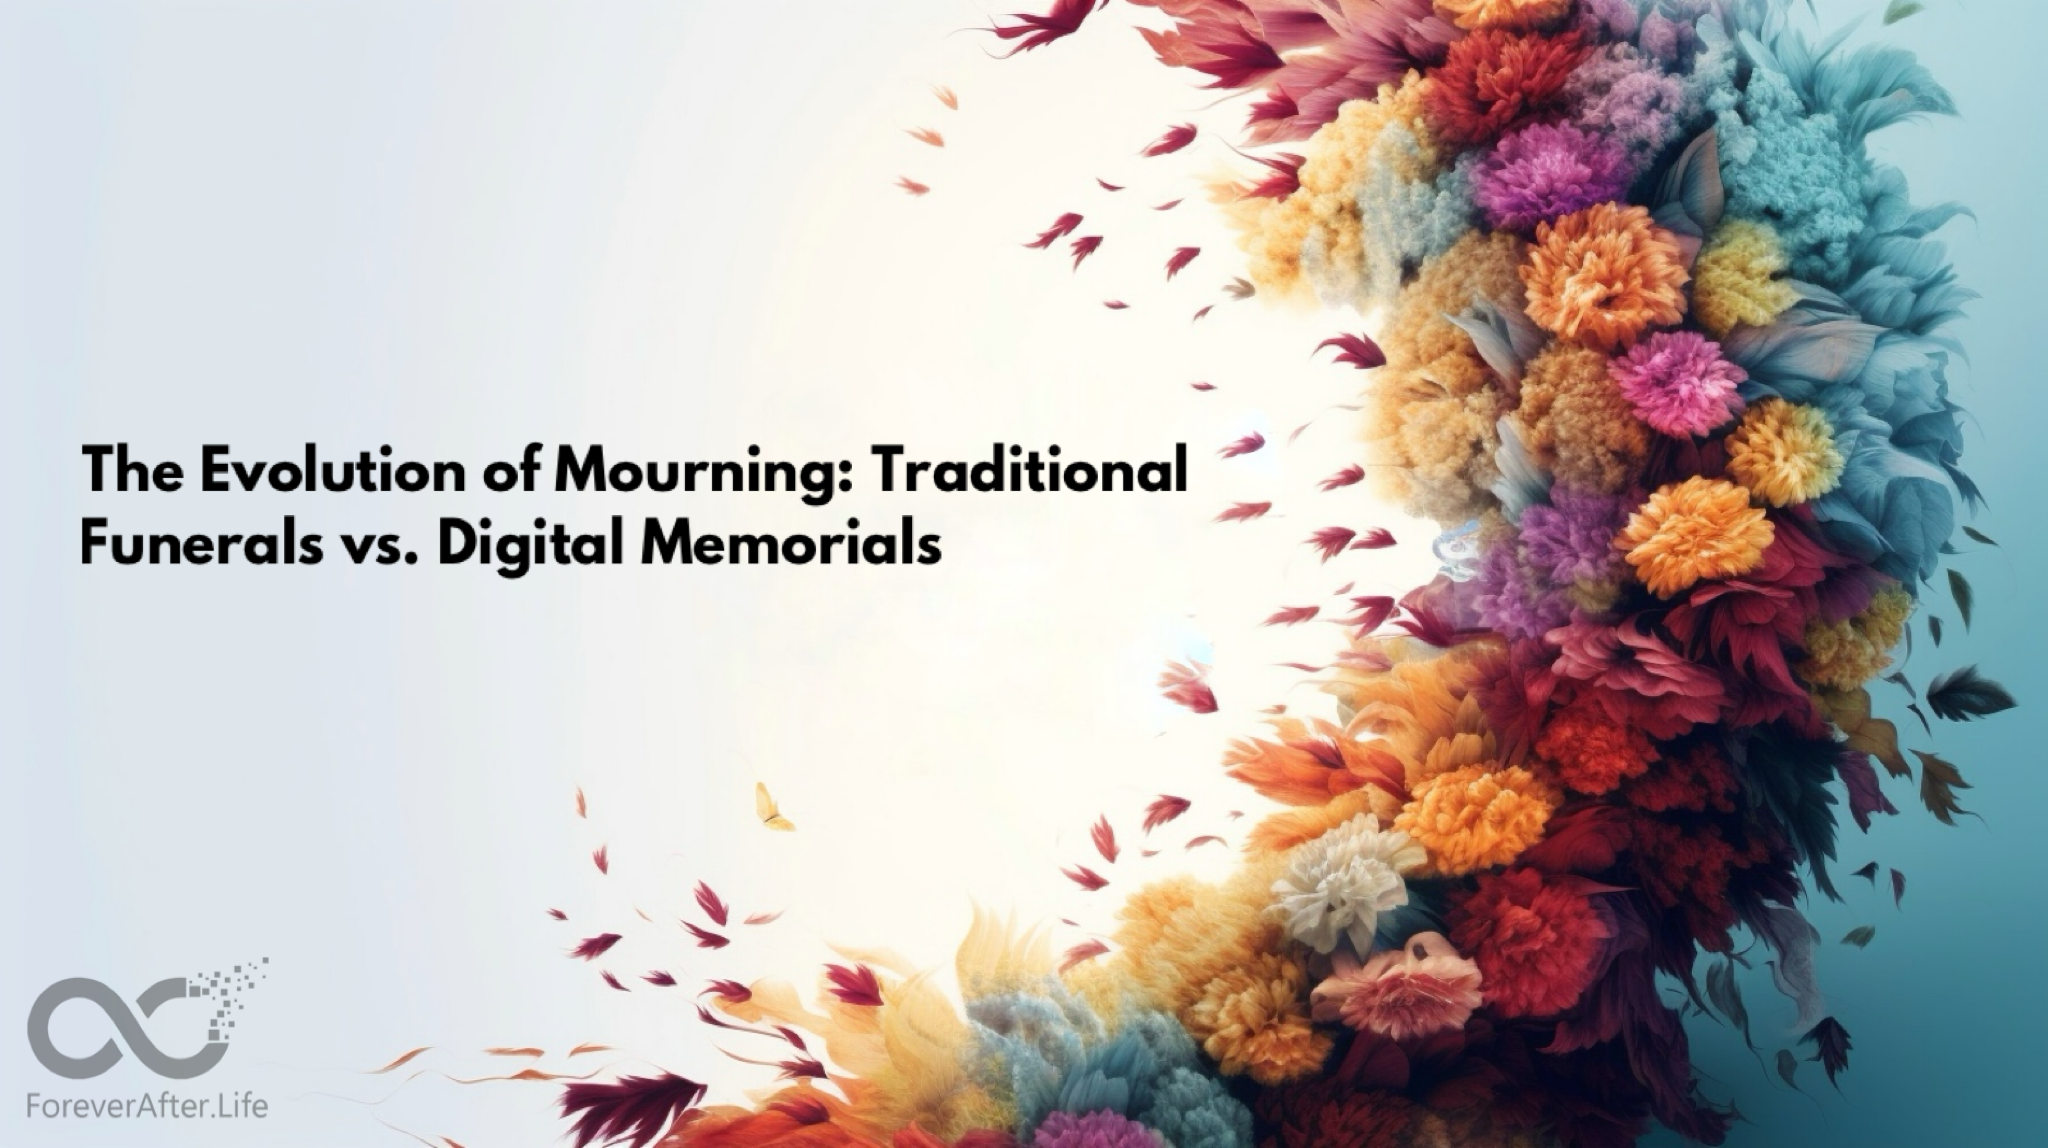 The Evolution of Mourning: Traditional Funerals vs. Digital Memorials